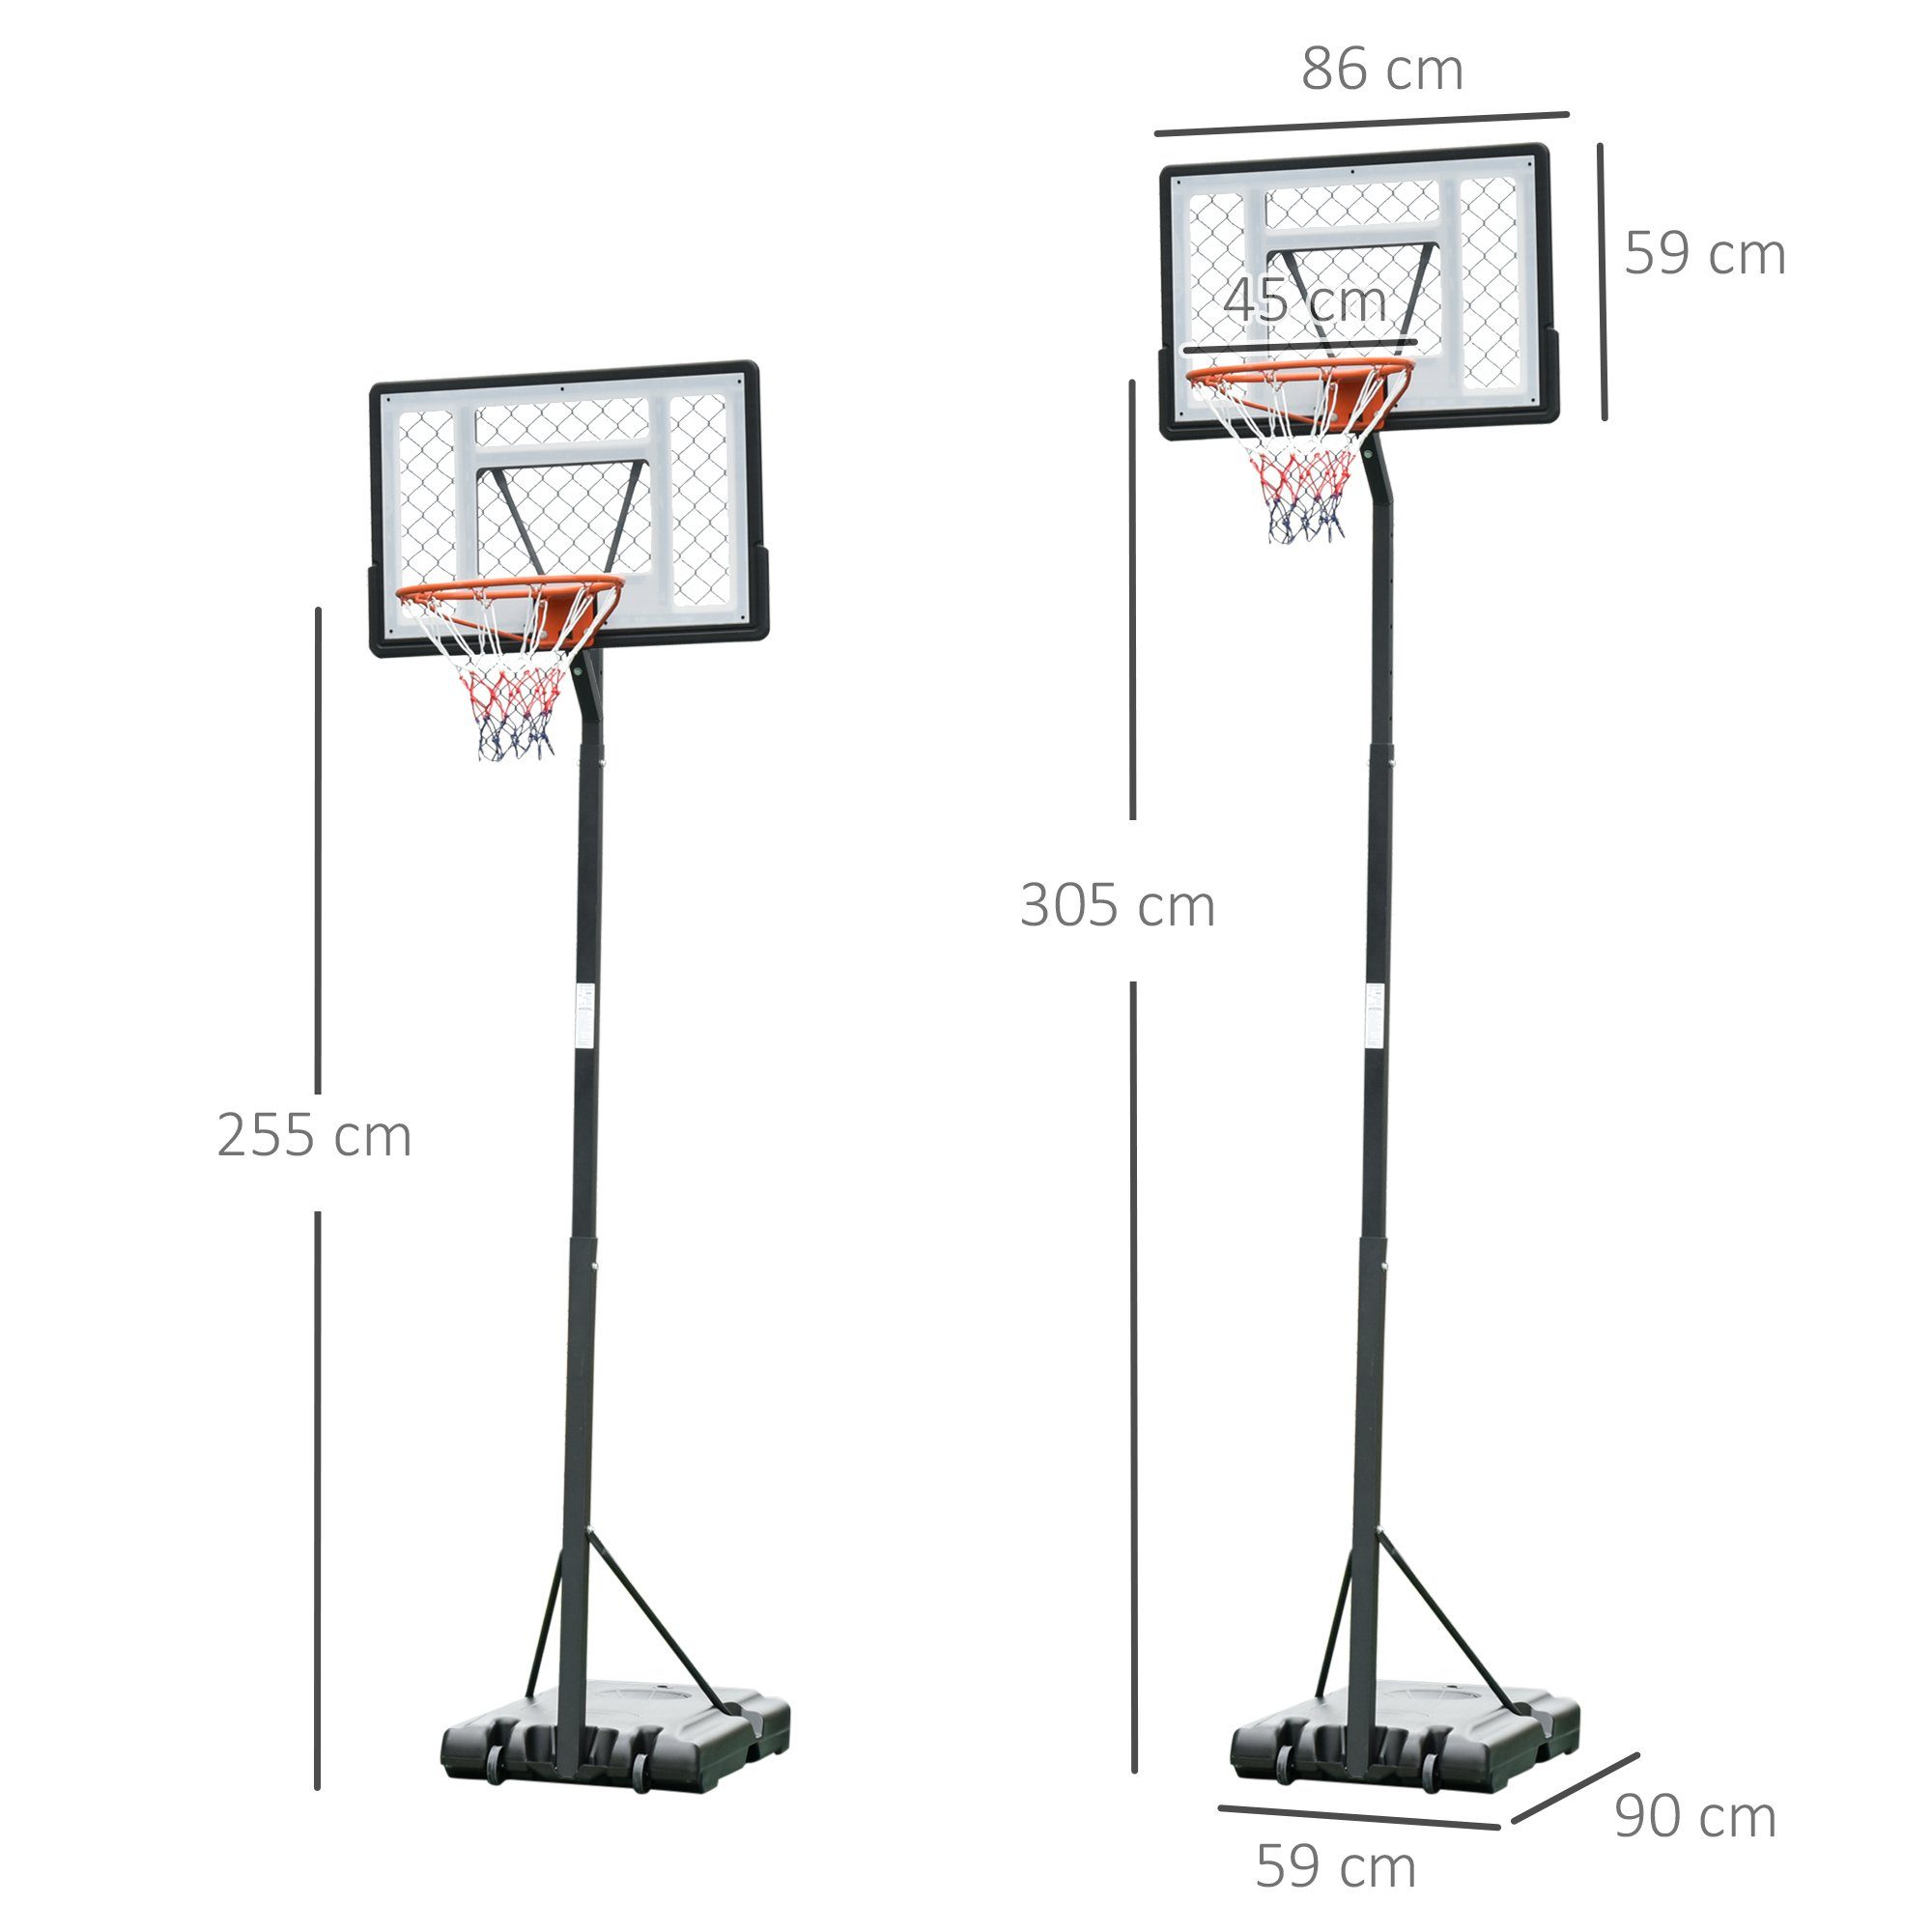 HOMCOM Basketballständer Basketballkorb 2 Rädern mit